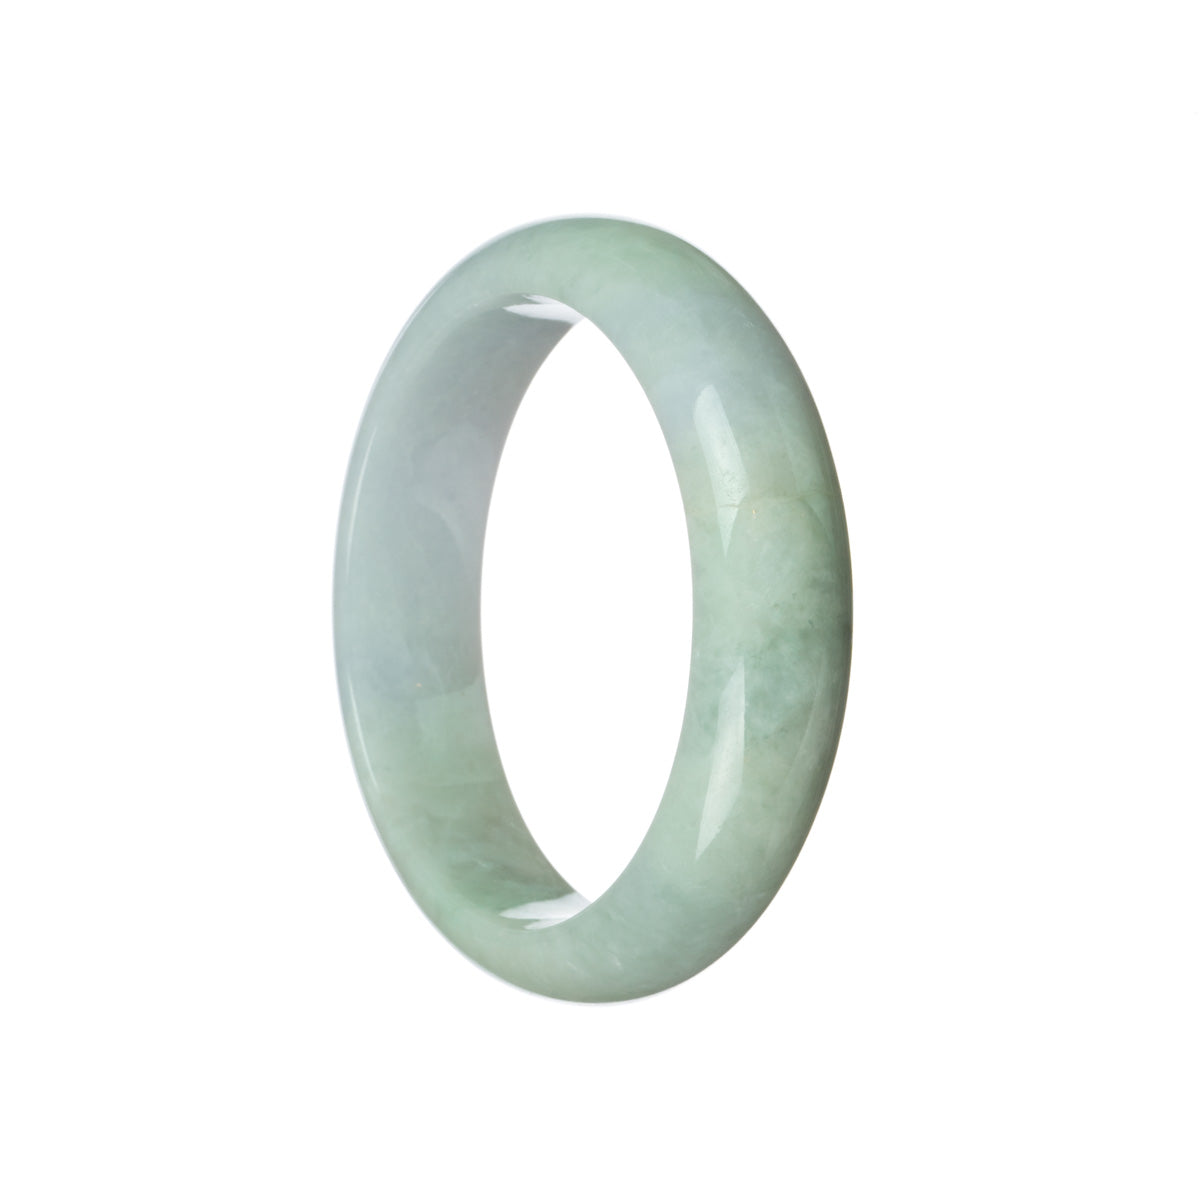 Genuine Type A Pale green with lavender Jadeite Jade Bangle Bracelet - 59mm Half Moon